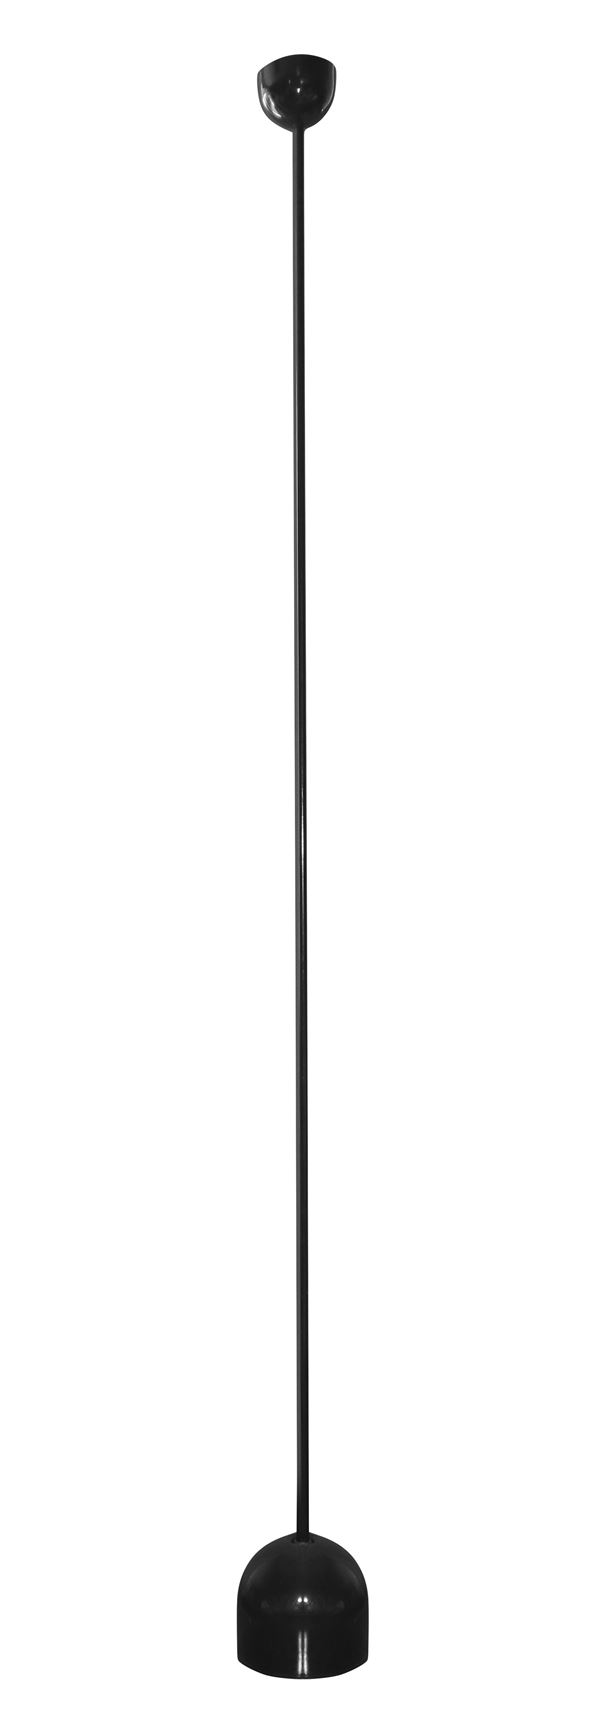 Prod. Flos - Black lacquered floor lamp, Hypotenuse model